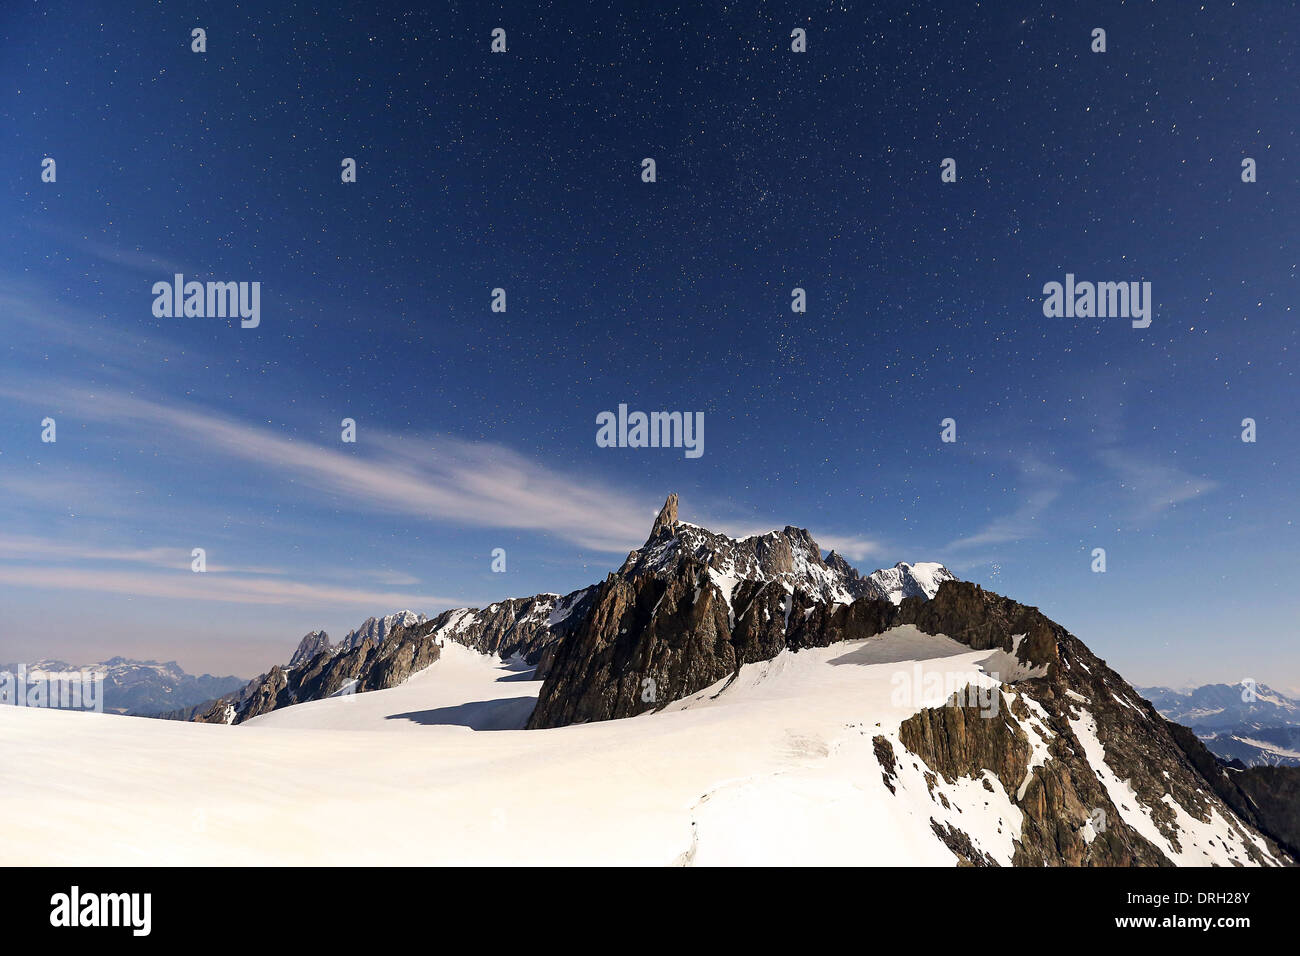 Moonlight on the Dent du Géant mountain peak.The Mont Blanc massif (Monte Bianco). Night landscape, starry sky. Alps. Stock Photo